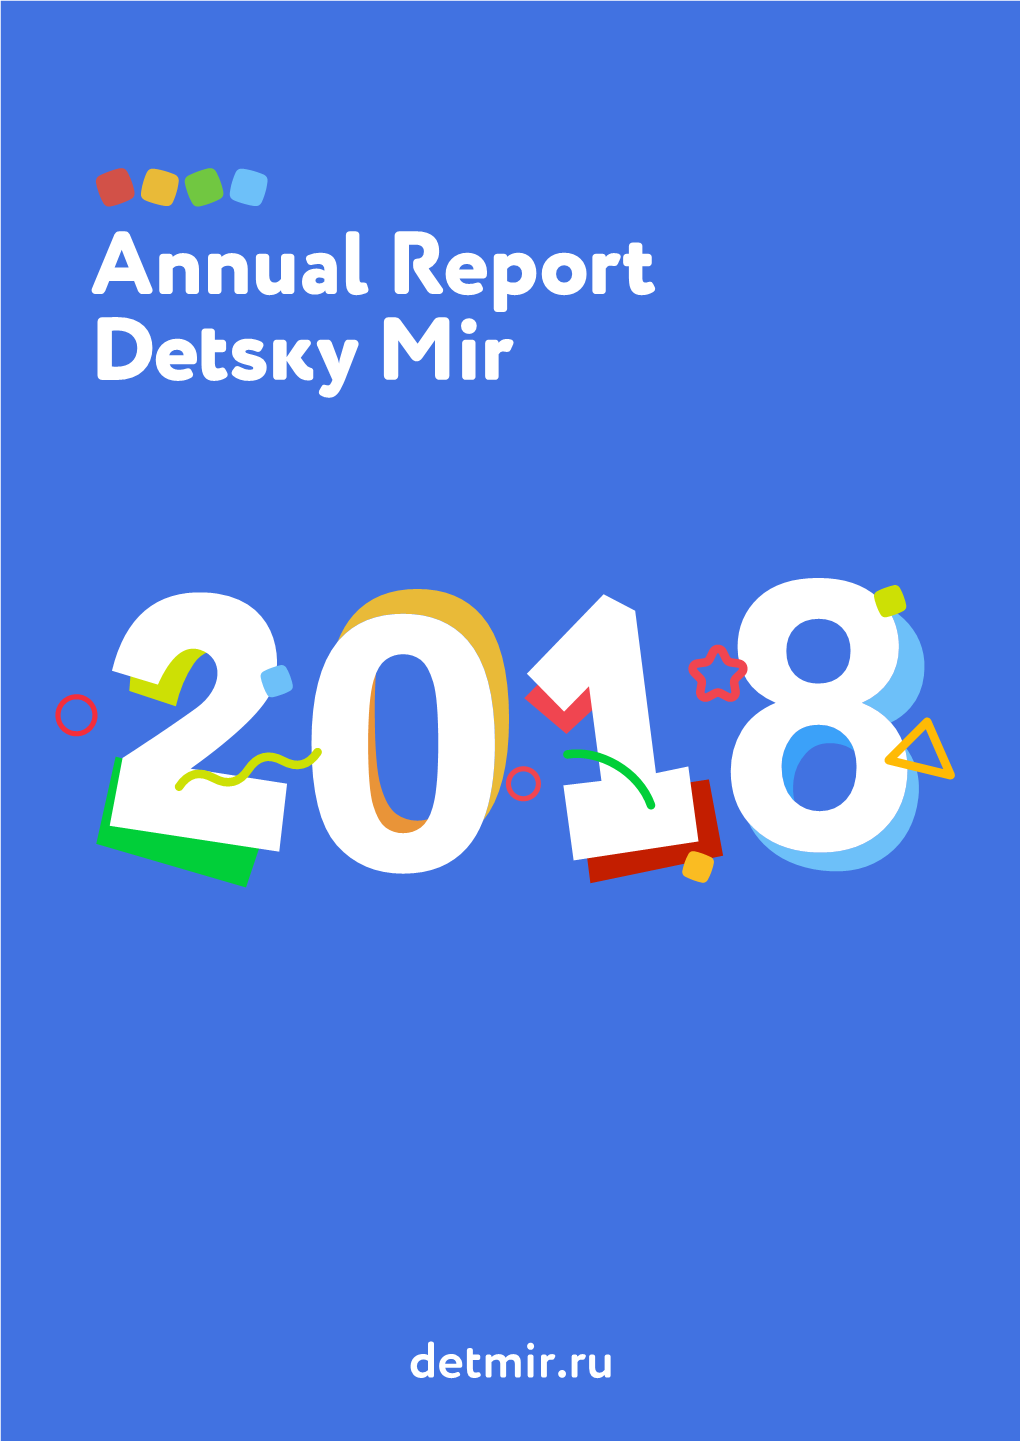 1 Annual Report 2018